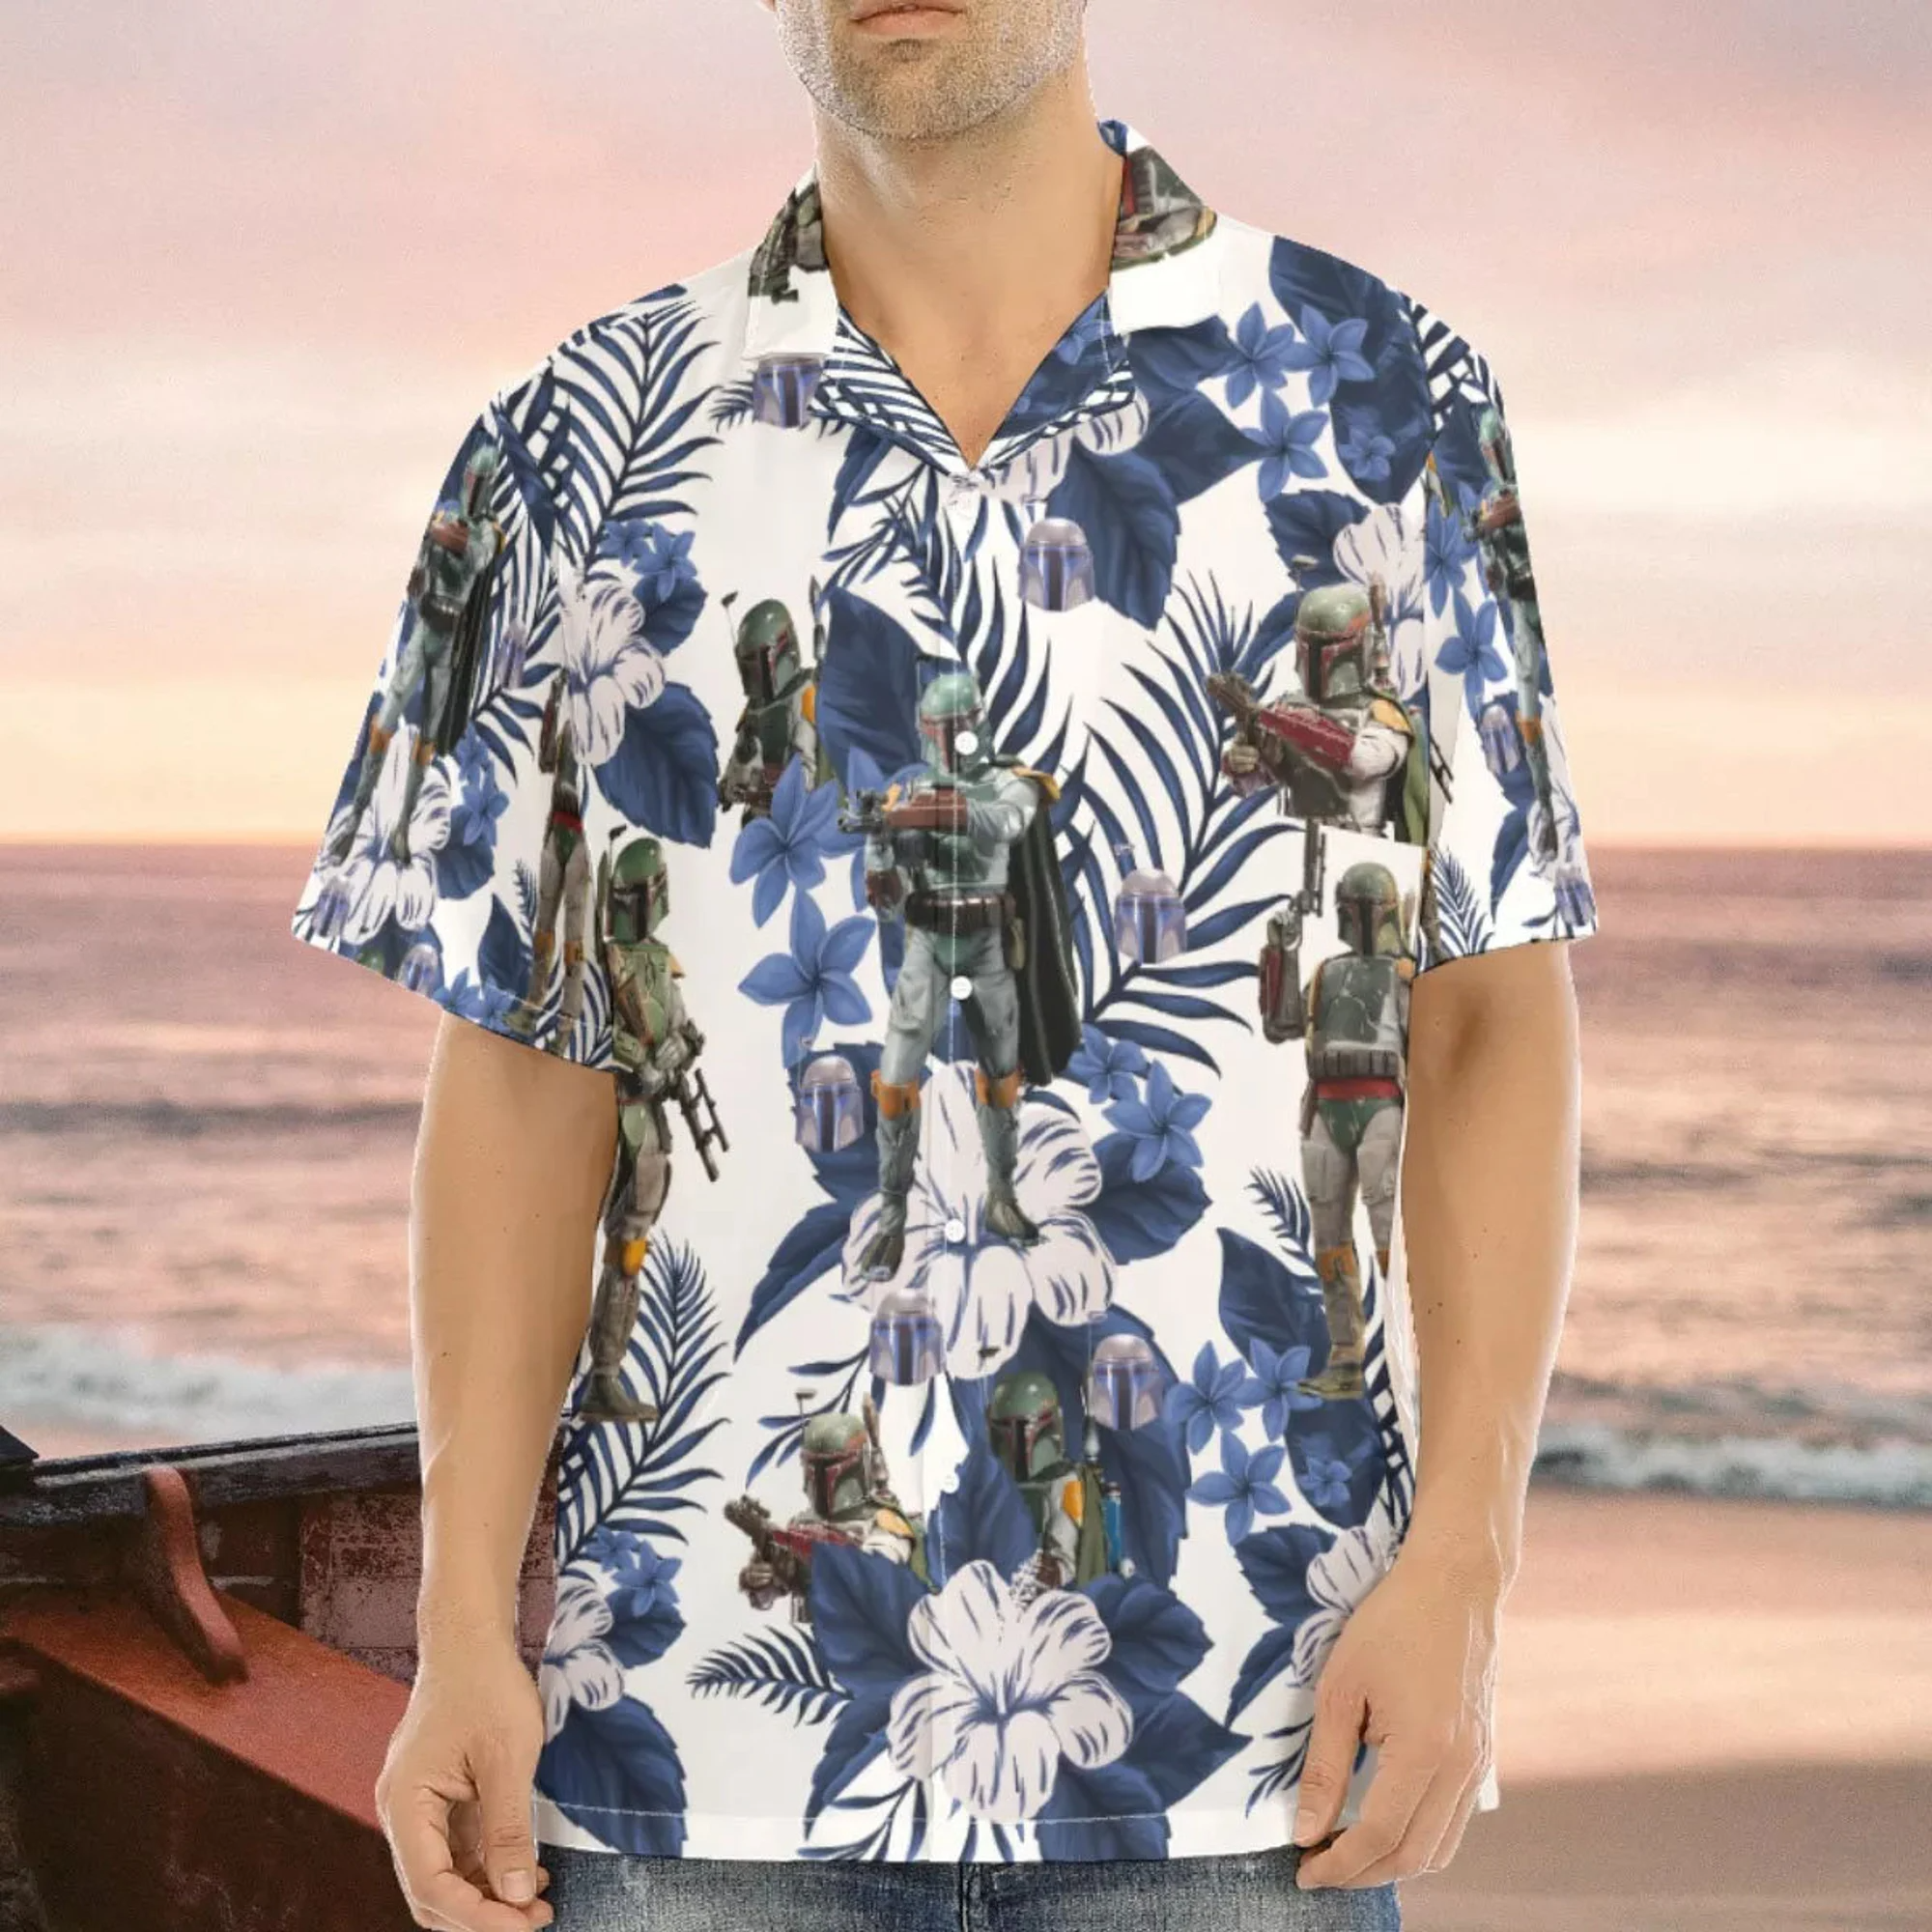 Louis Vuitton Supreme Monogram Black Hawaiian Shirt And Beach Shorts -  Tagotee